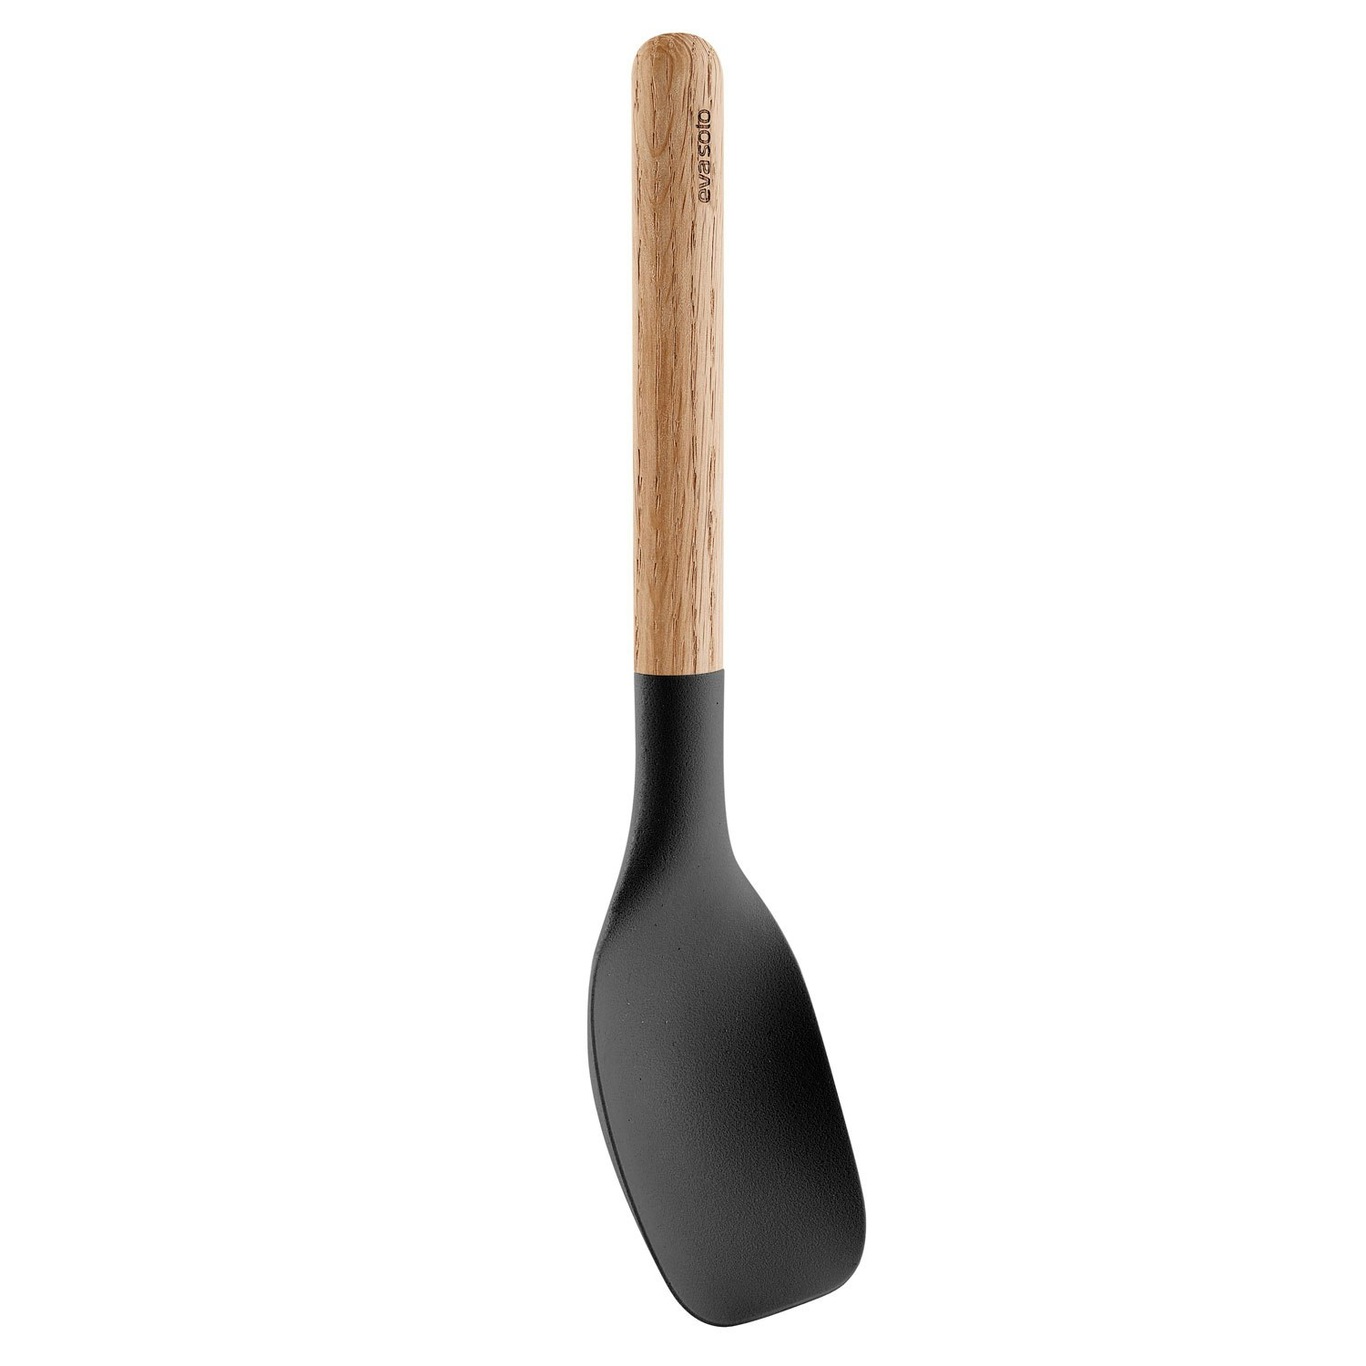 https://royaldesign.com/image/2/eva-solo-nordic-kitchen-spatula-1?w=800&quality=80